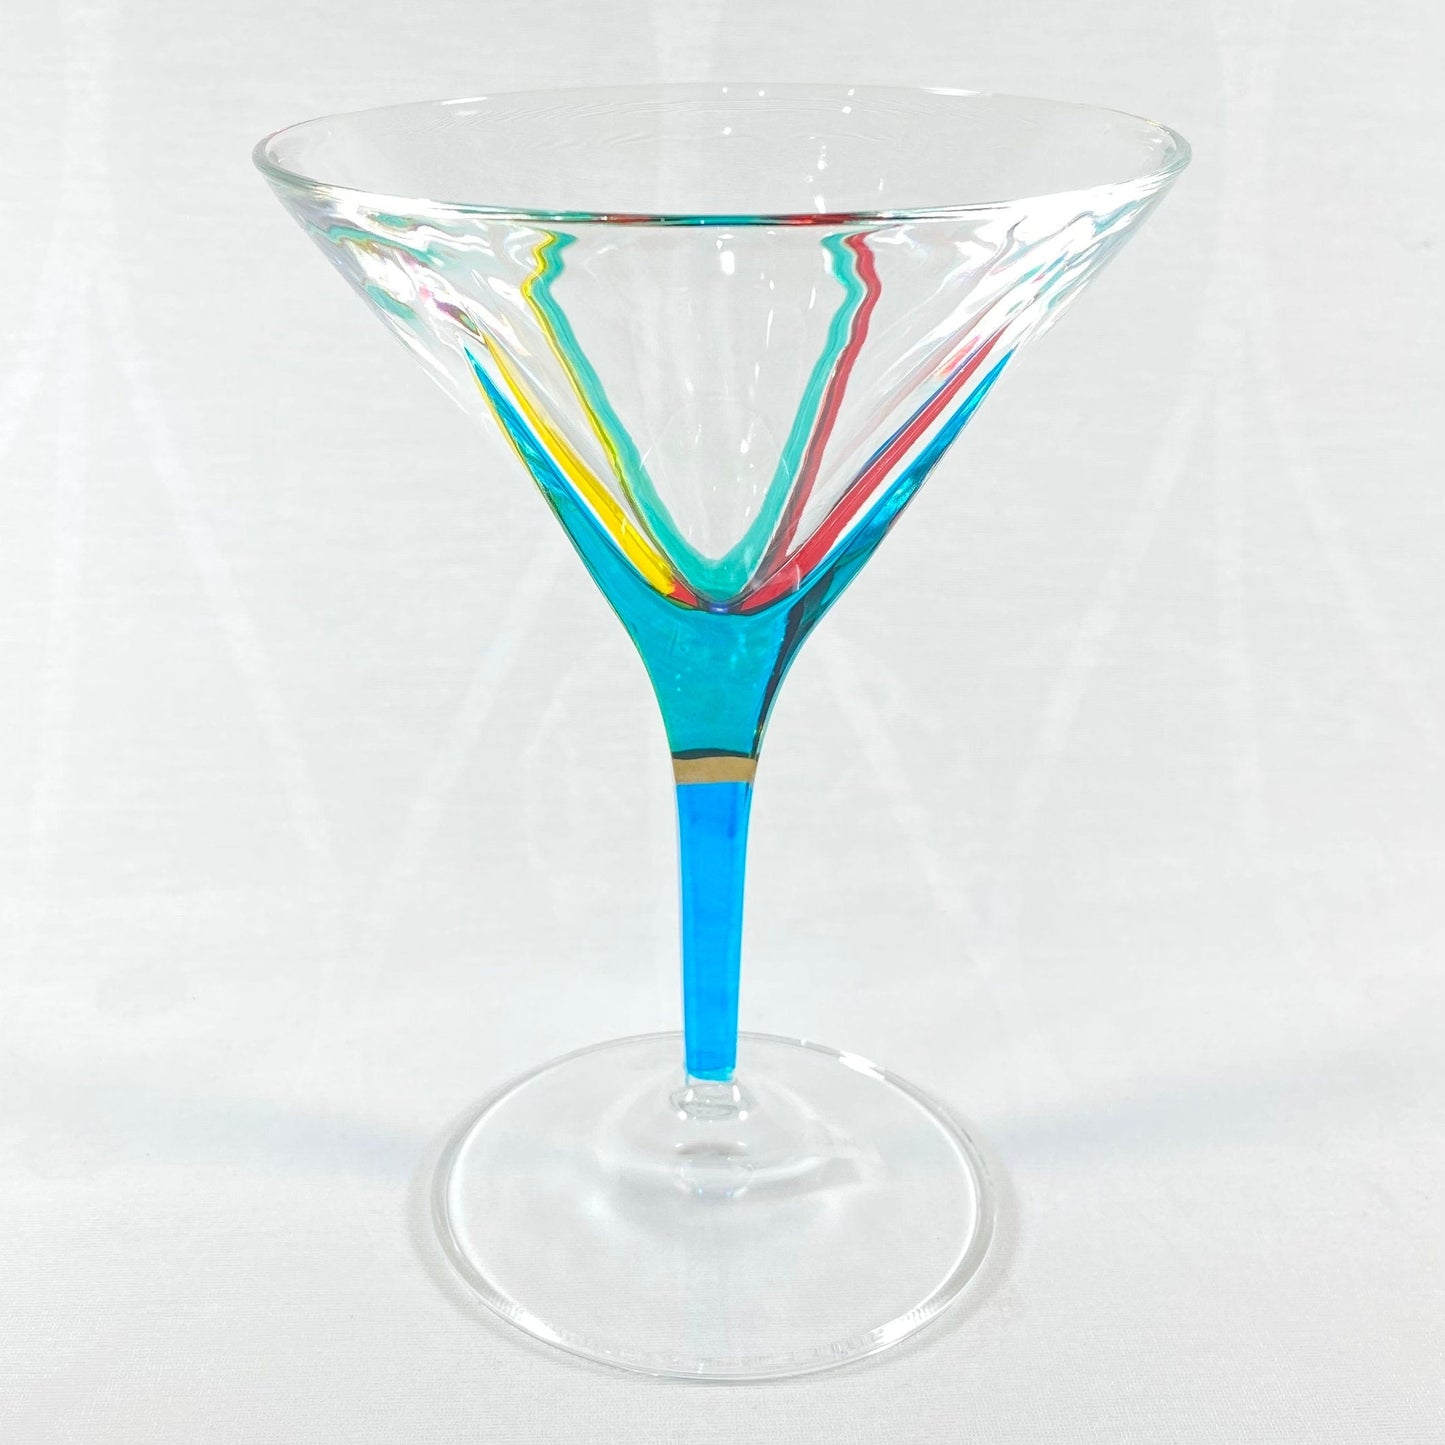 Aqua Blue Stem Venetian Glass Martini Glass - Handmade in Italy, Colorful Murano Glass